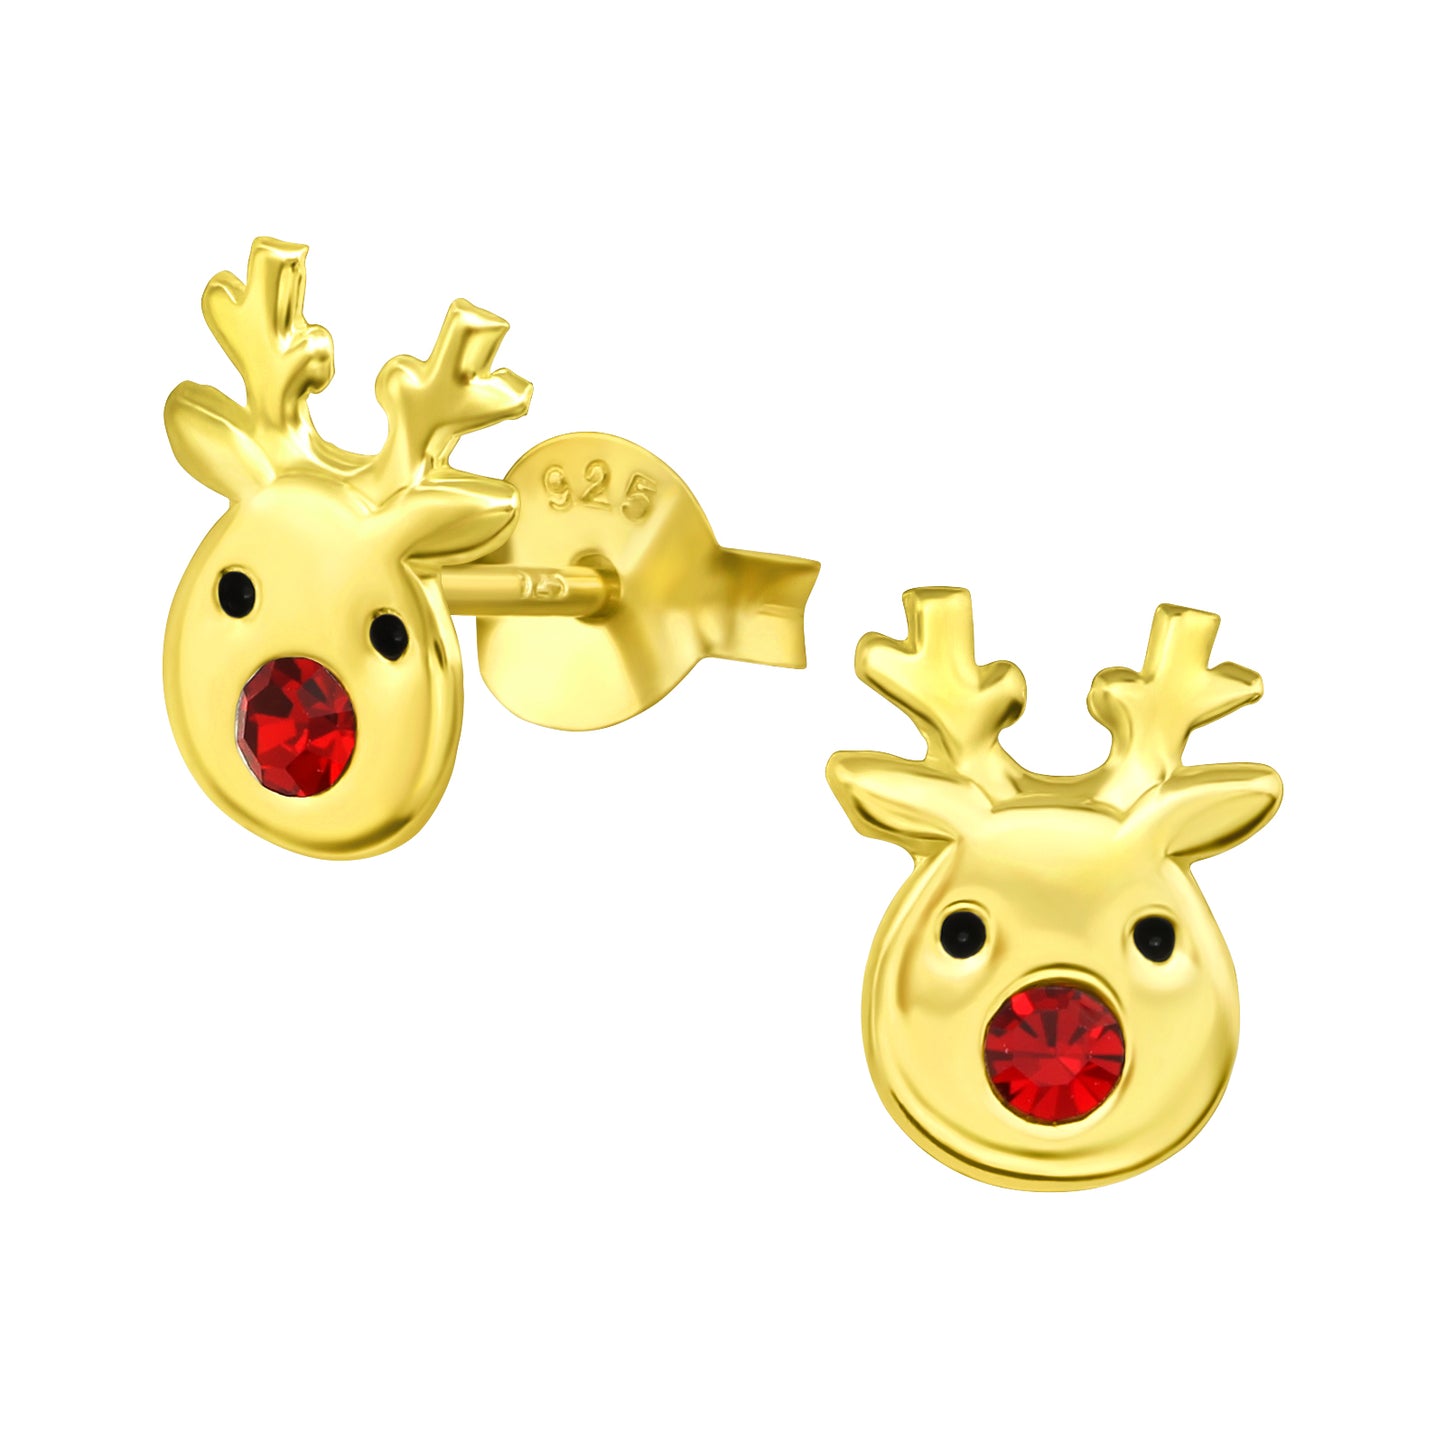 Gold plated Rudolph reindeer sterling silver stud earrings